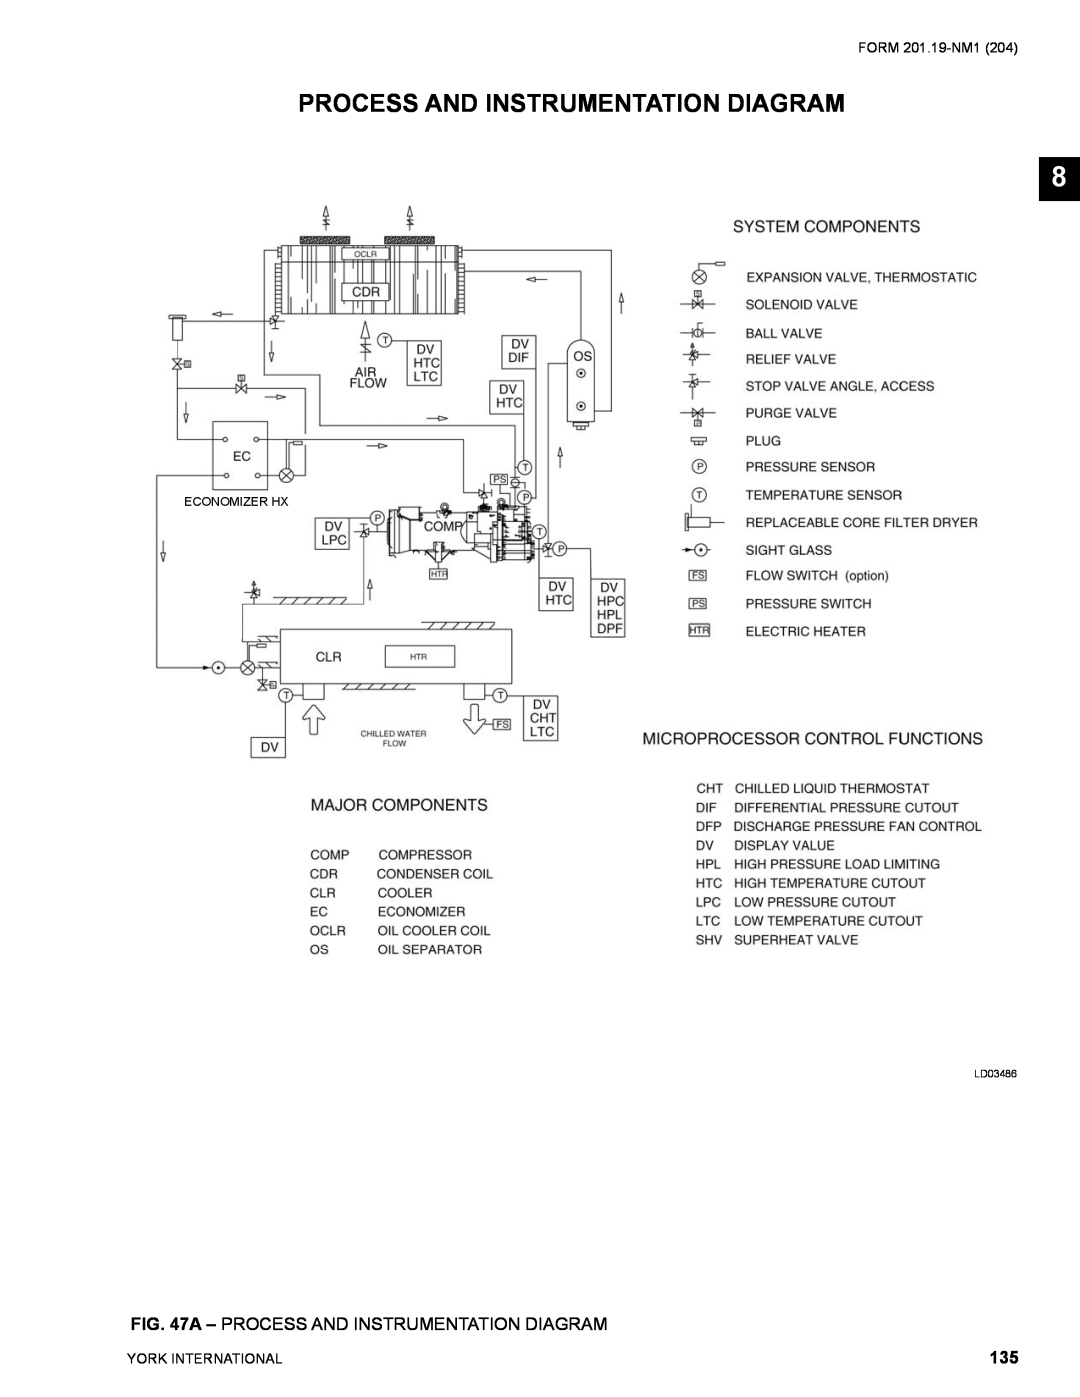 York YCAS0130 manual A - Process And Instrumentation Diagram, Economizer Hx 